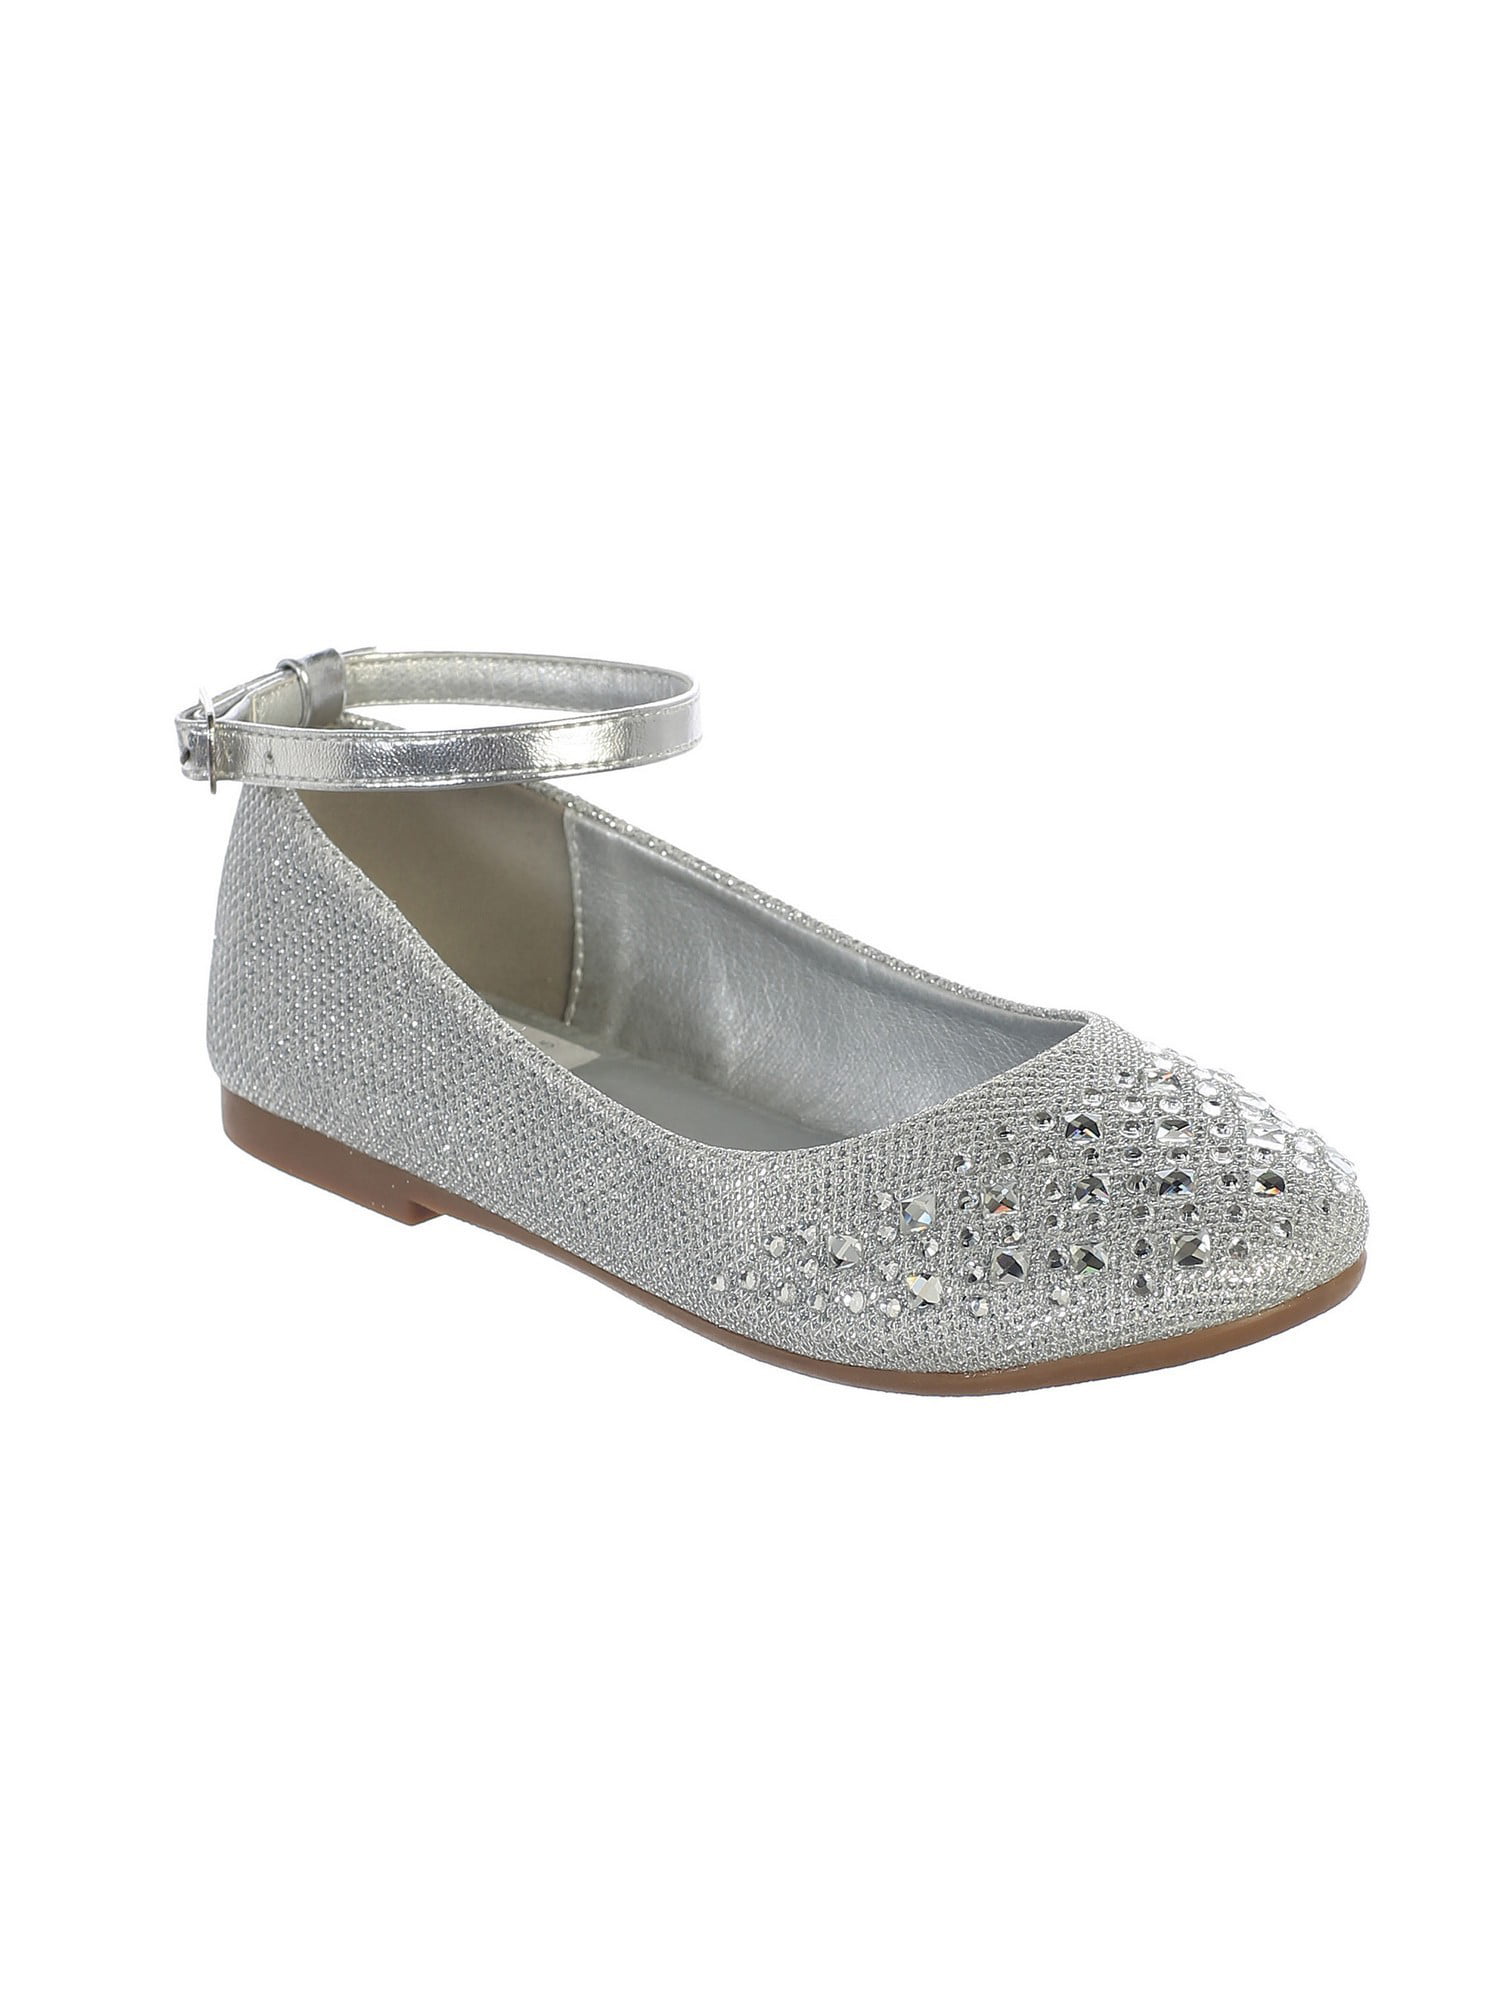 silver formal shoes rhinestones